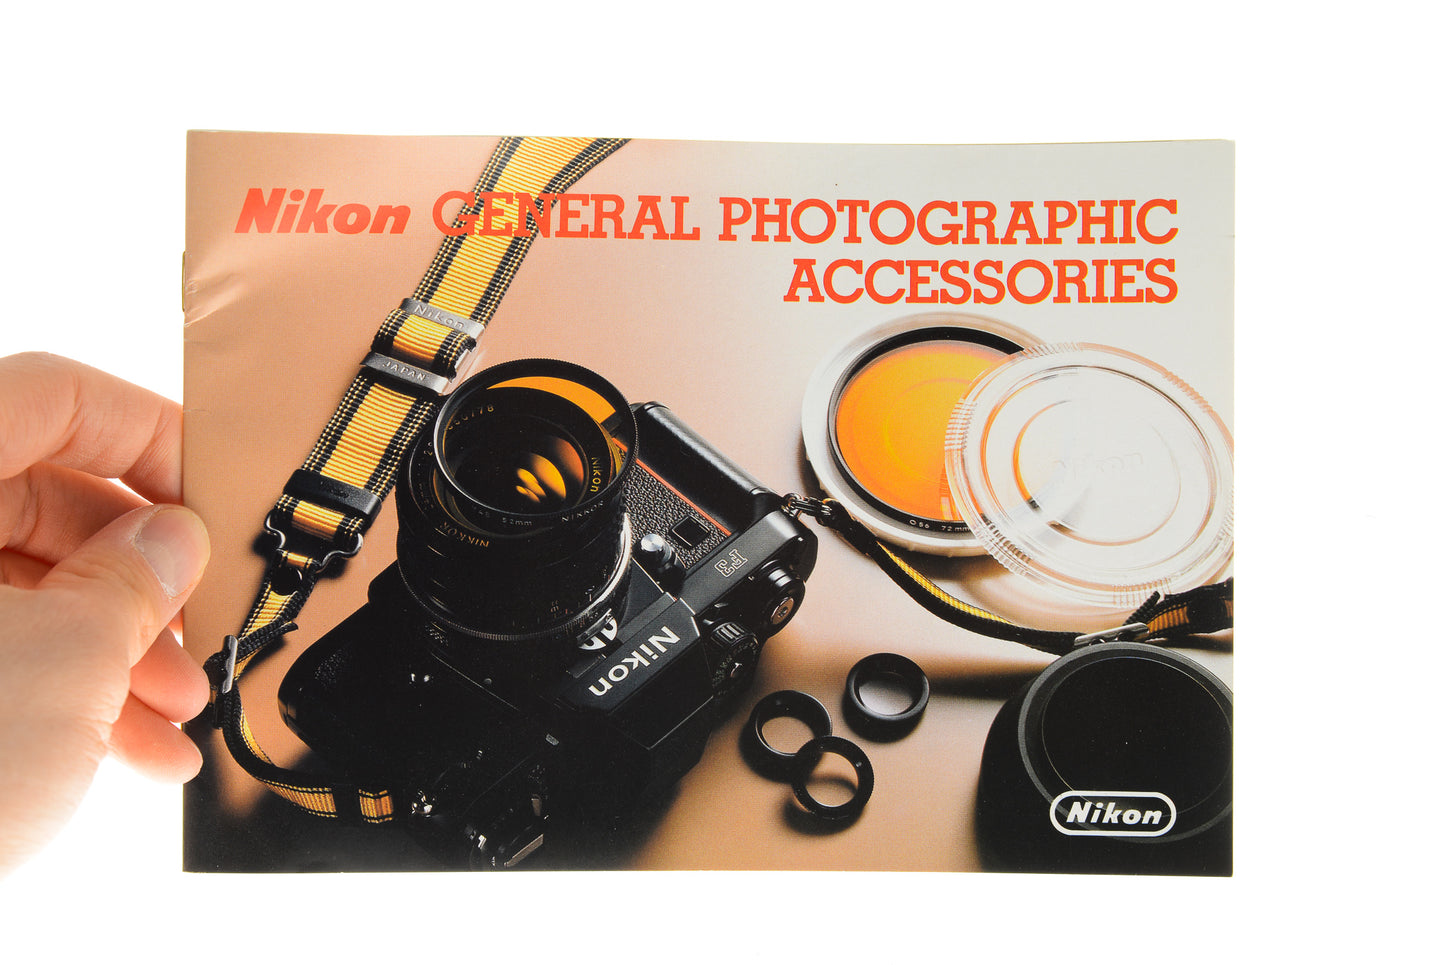 Nikon General Photographic Accessories Brochure